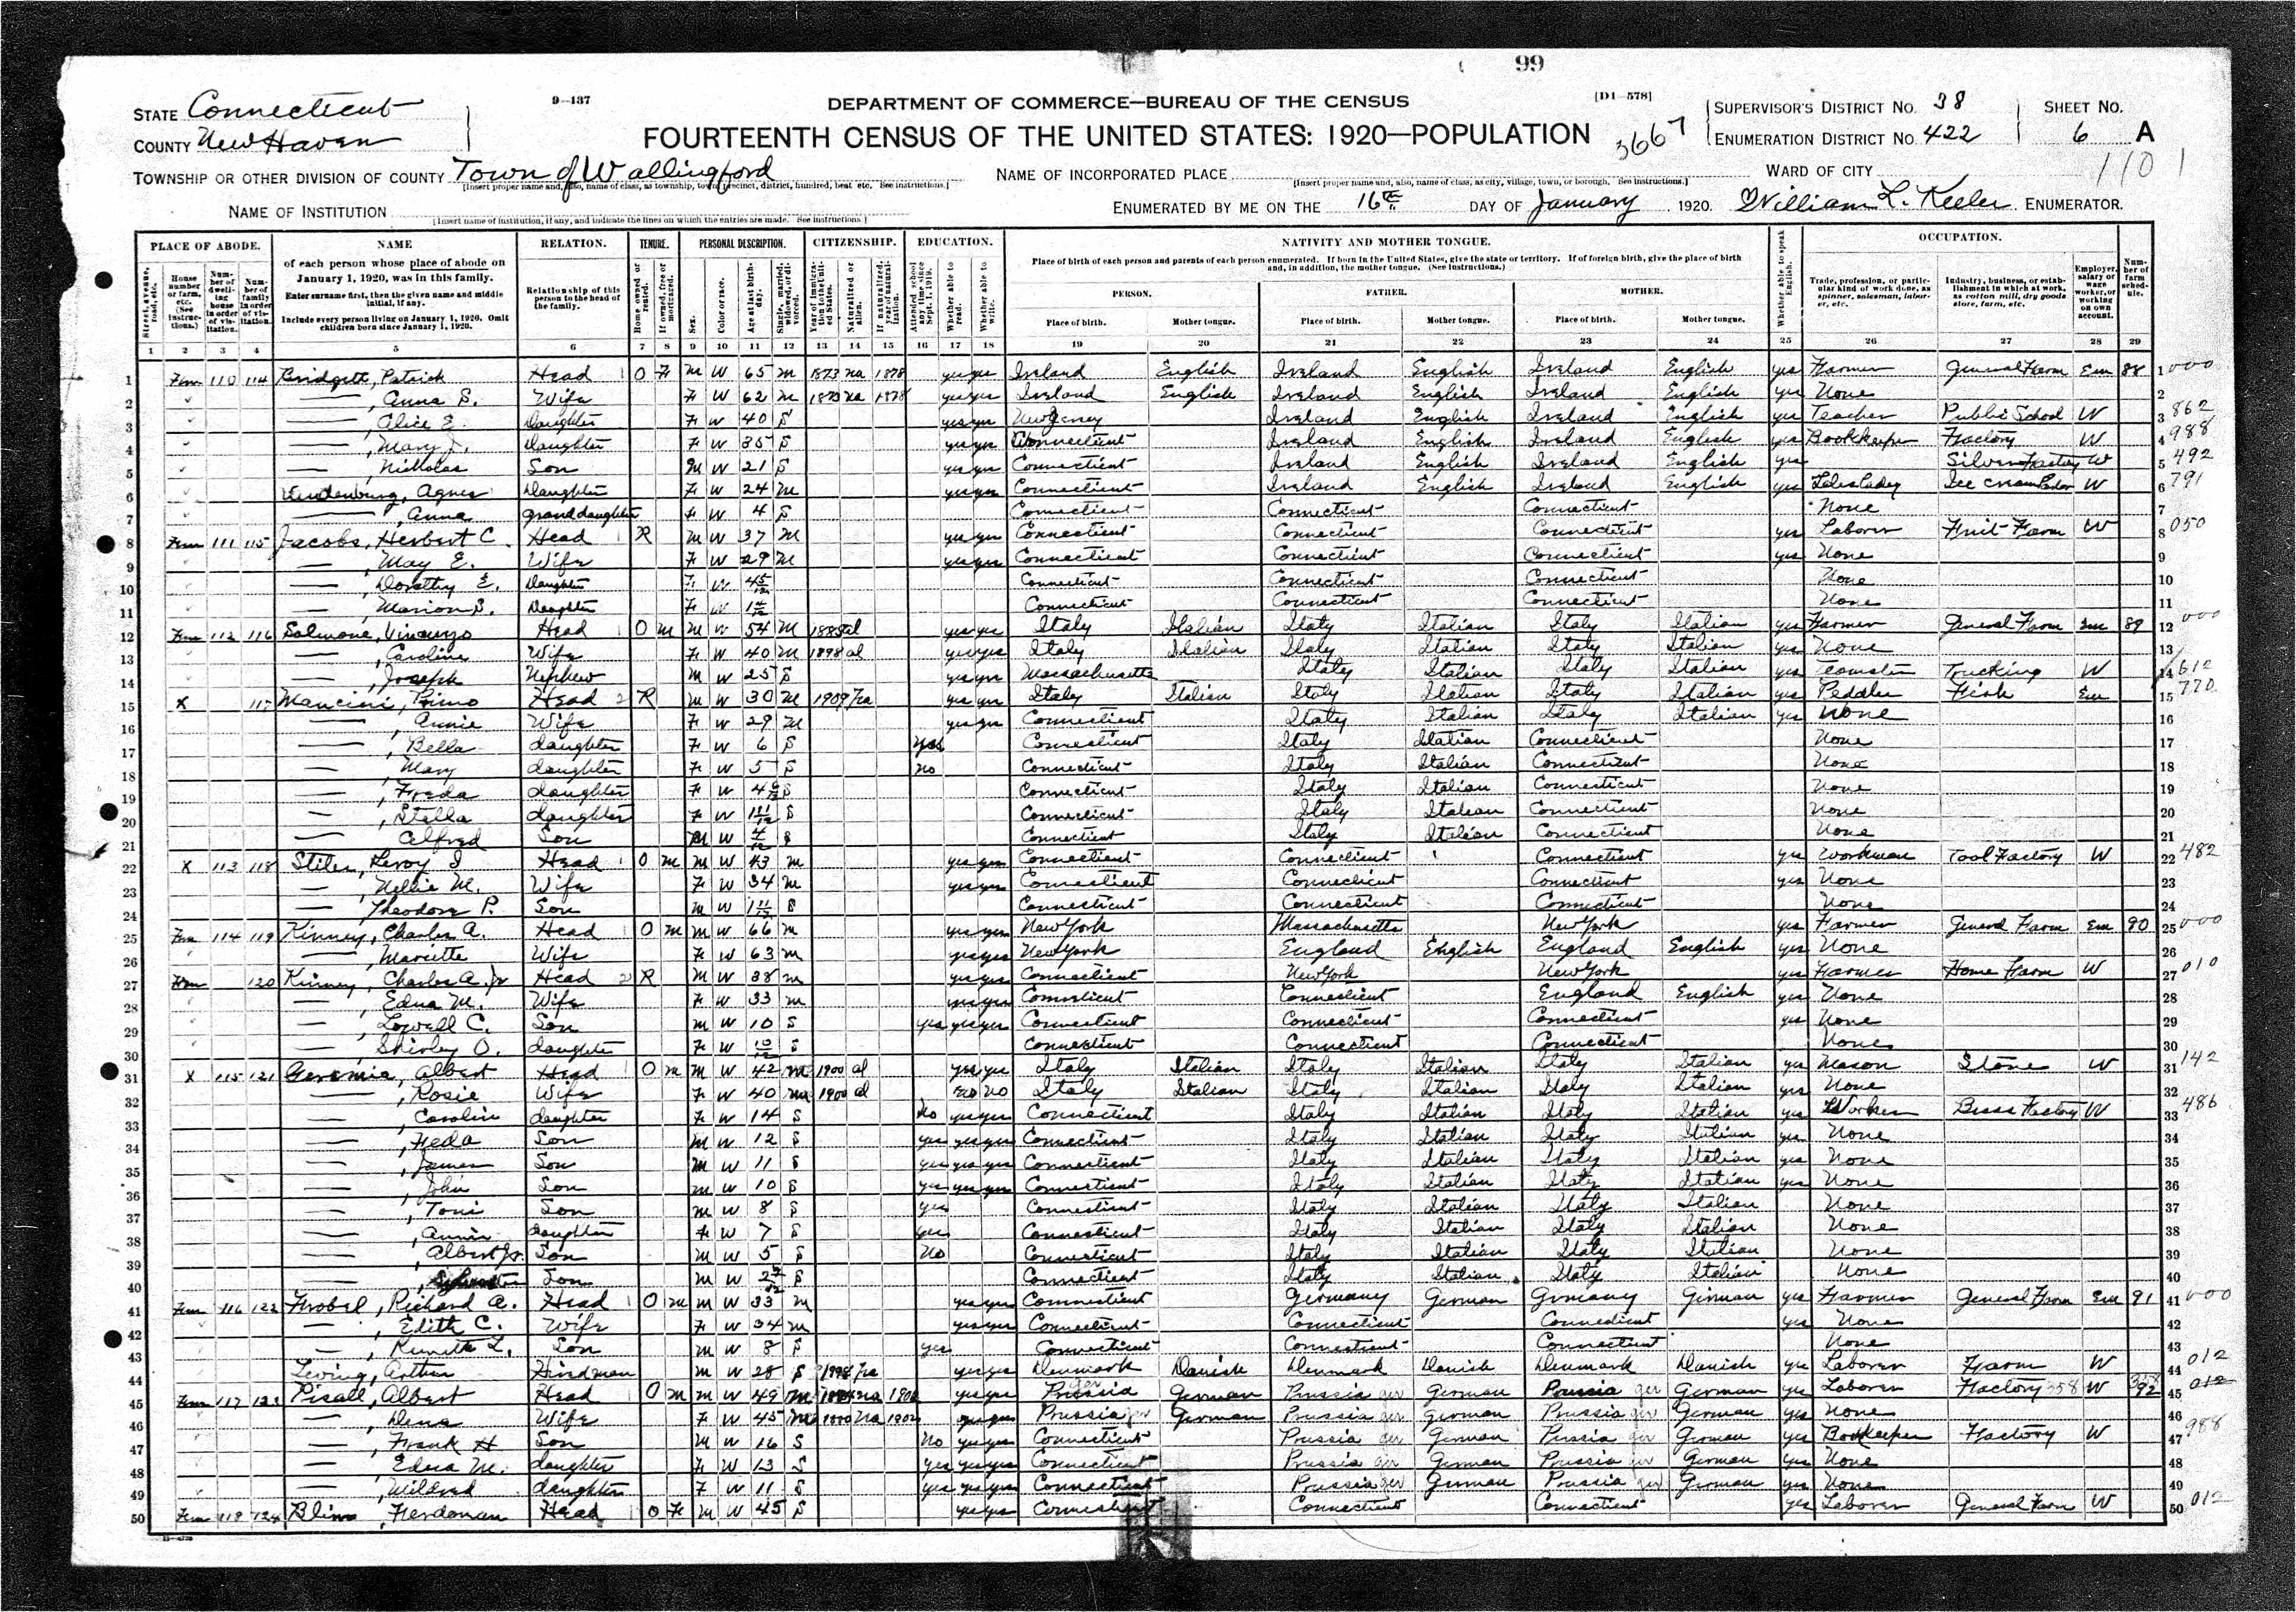 1920 u s federal census